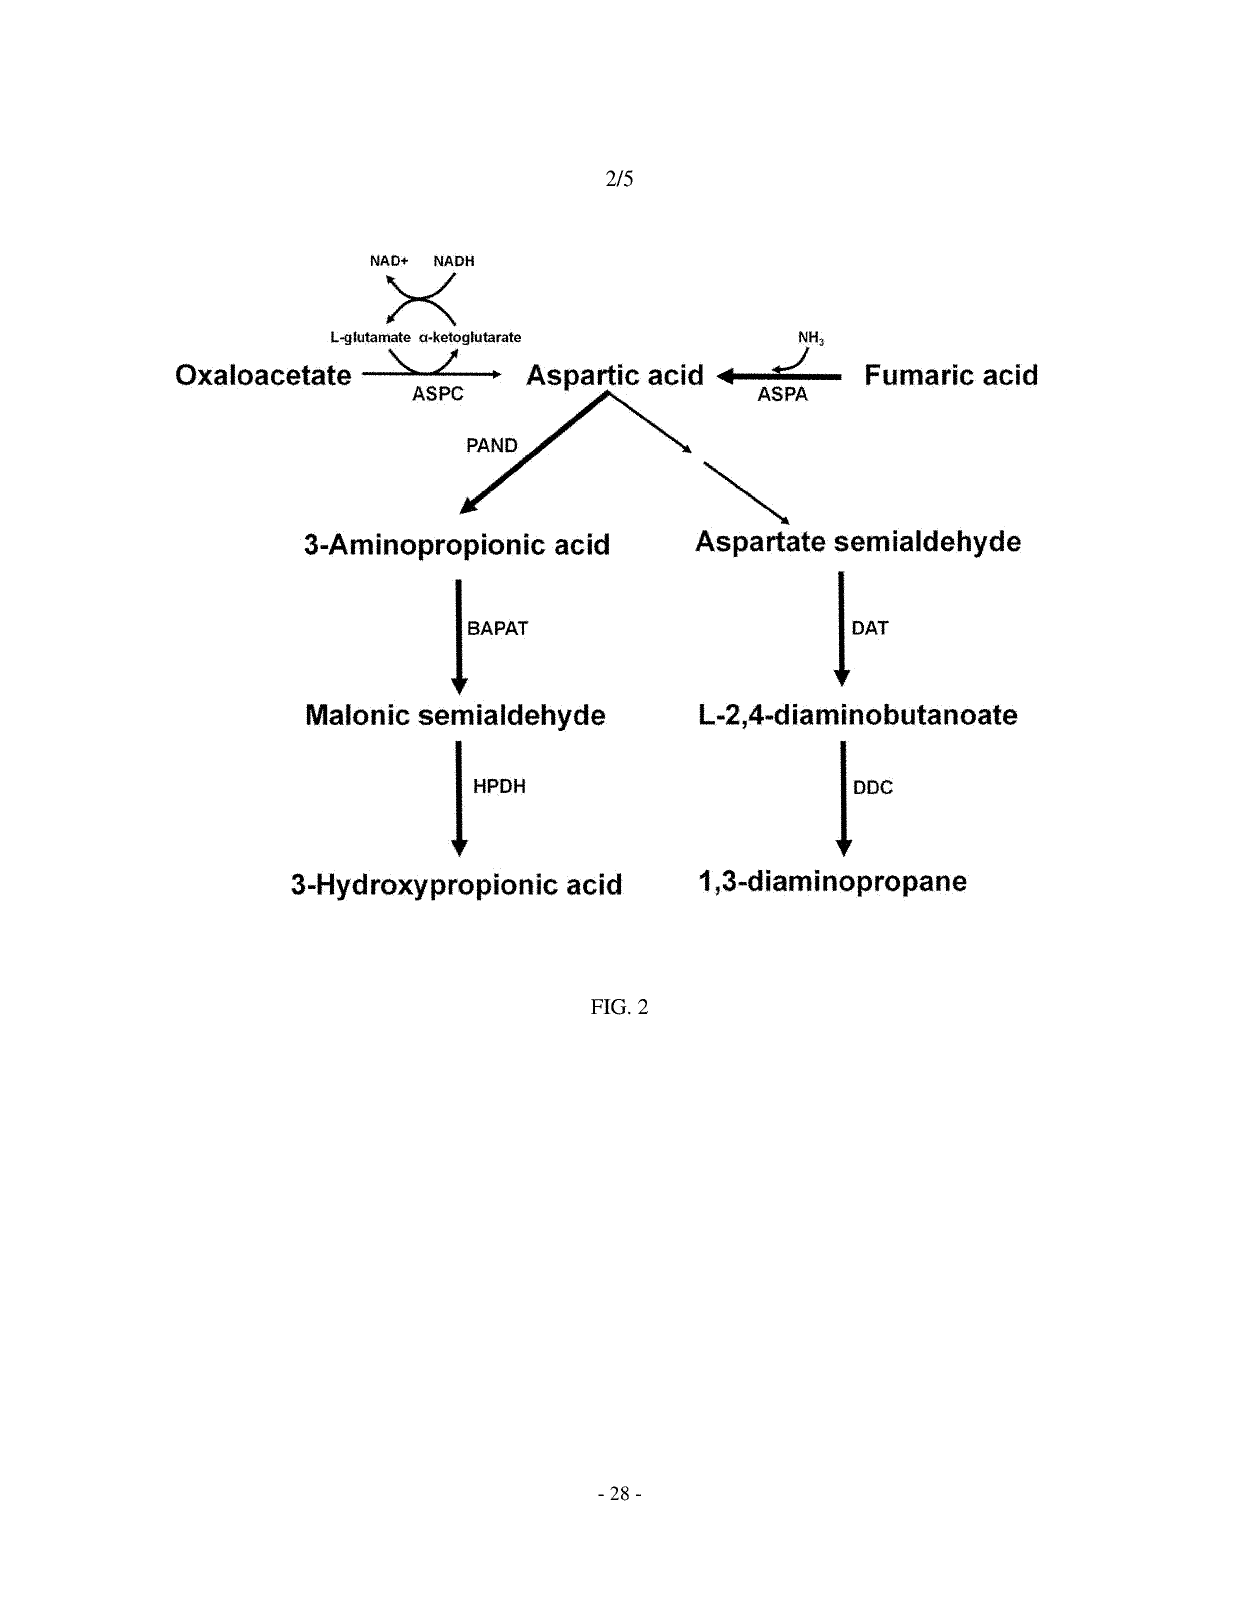 Mutant microorganism producing L-aspartic acid derivatives, and method for producing L-aspartic acid derivatives using same